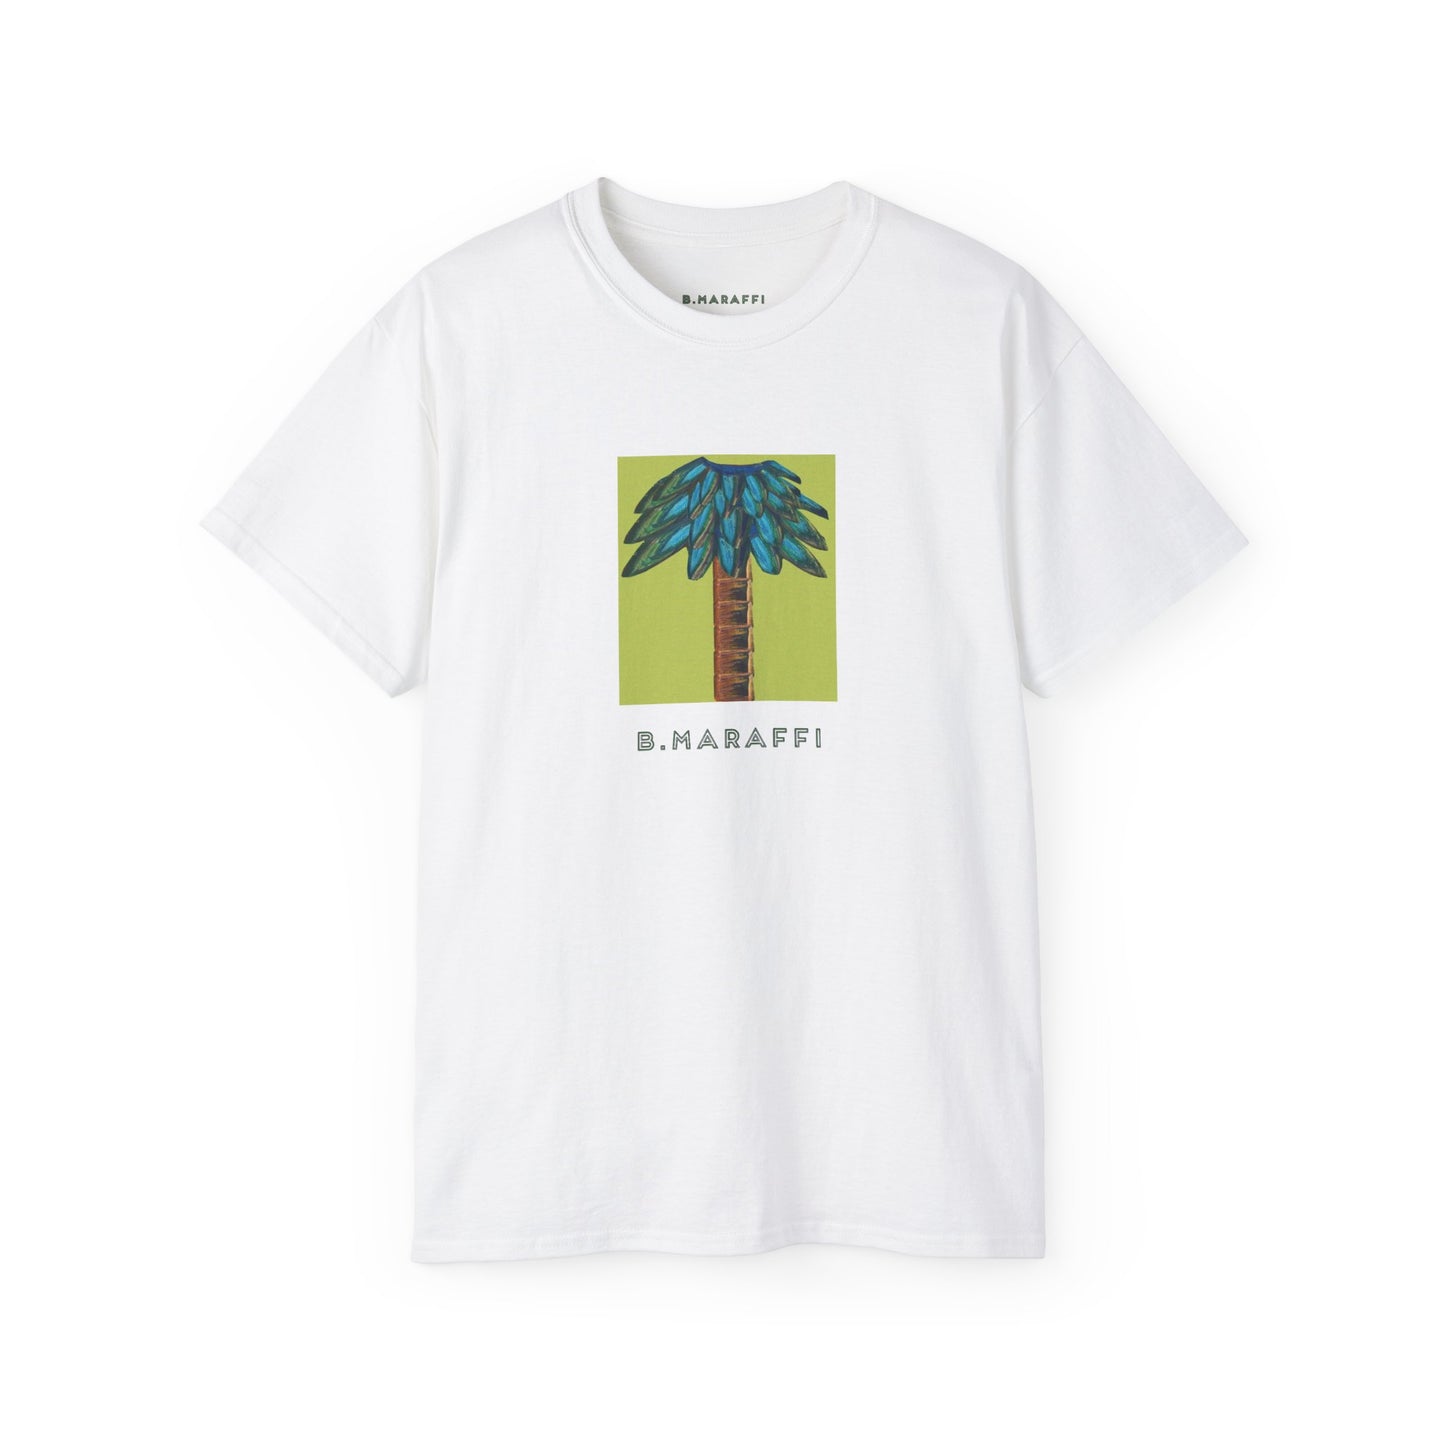 B.Maraffi Cotton T-shirt - Tiki Palm Lime